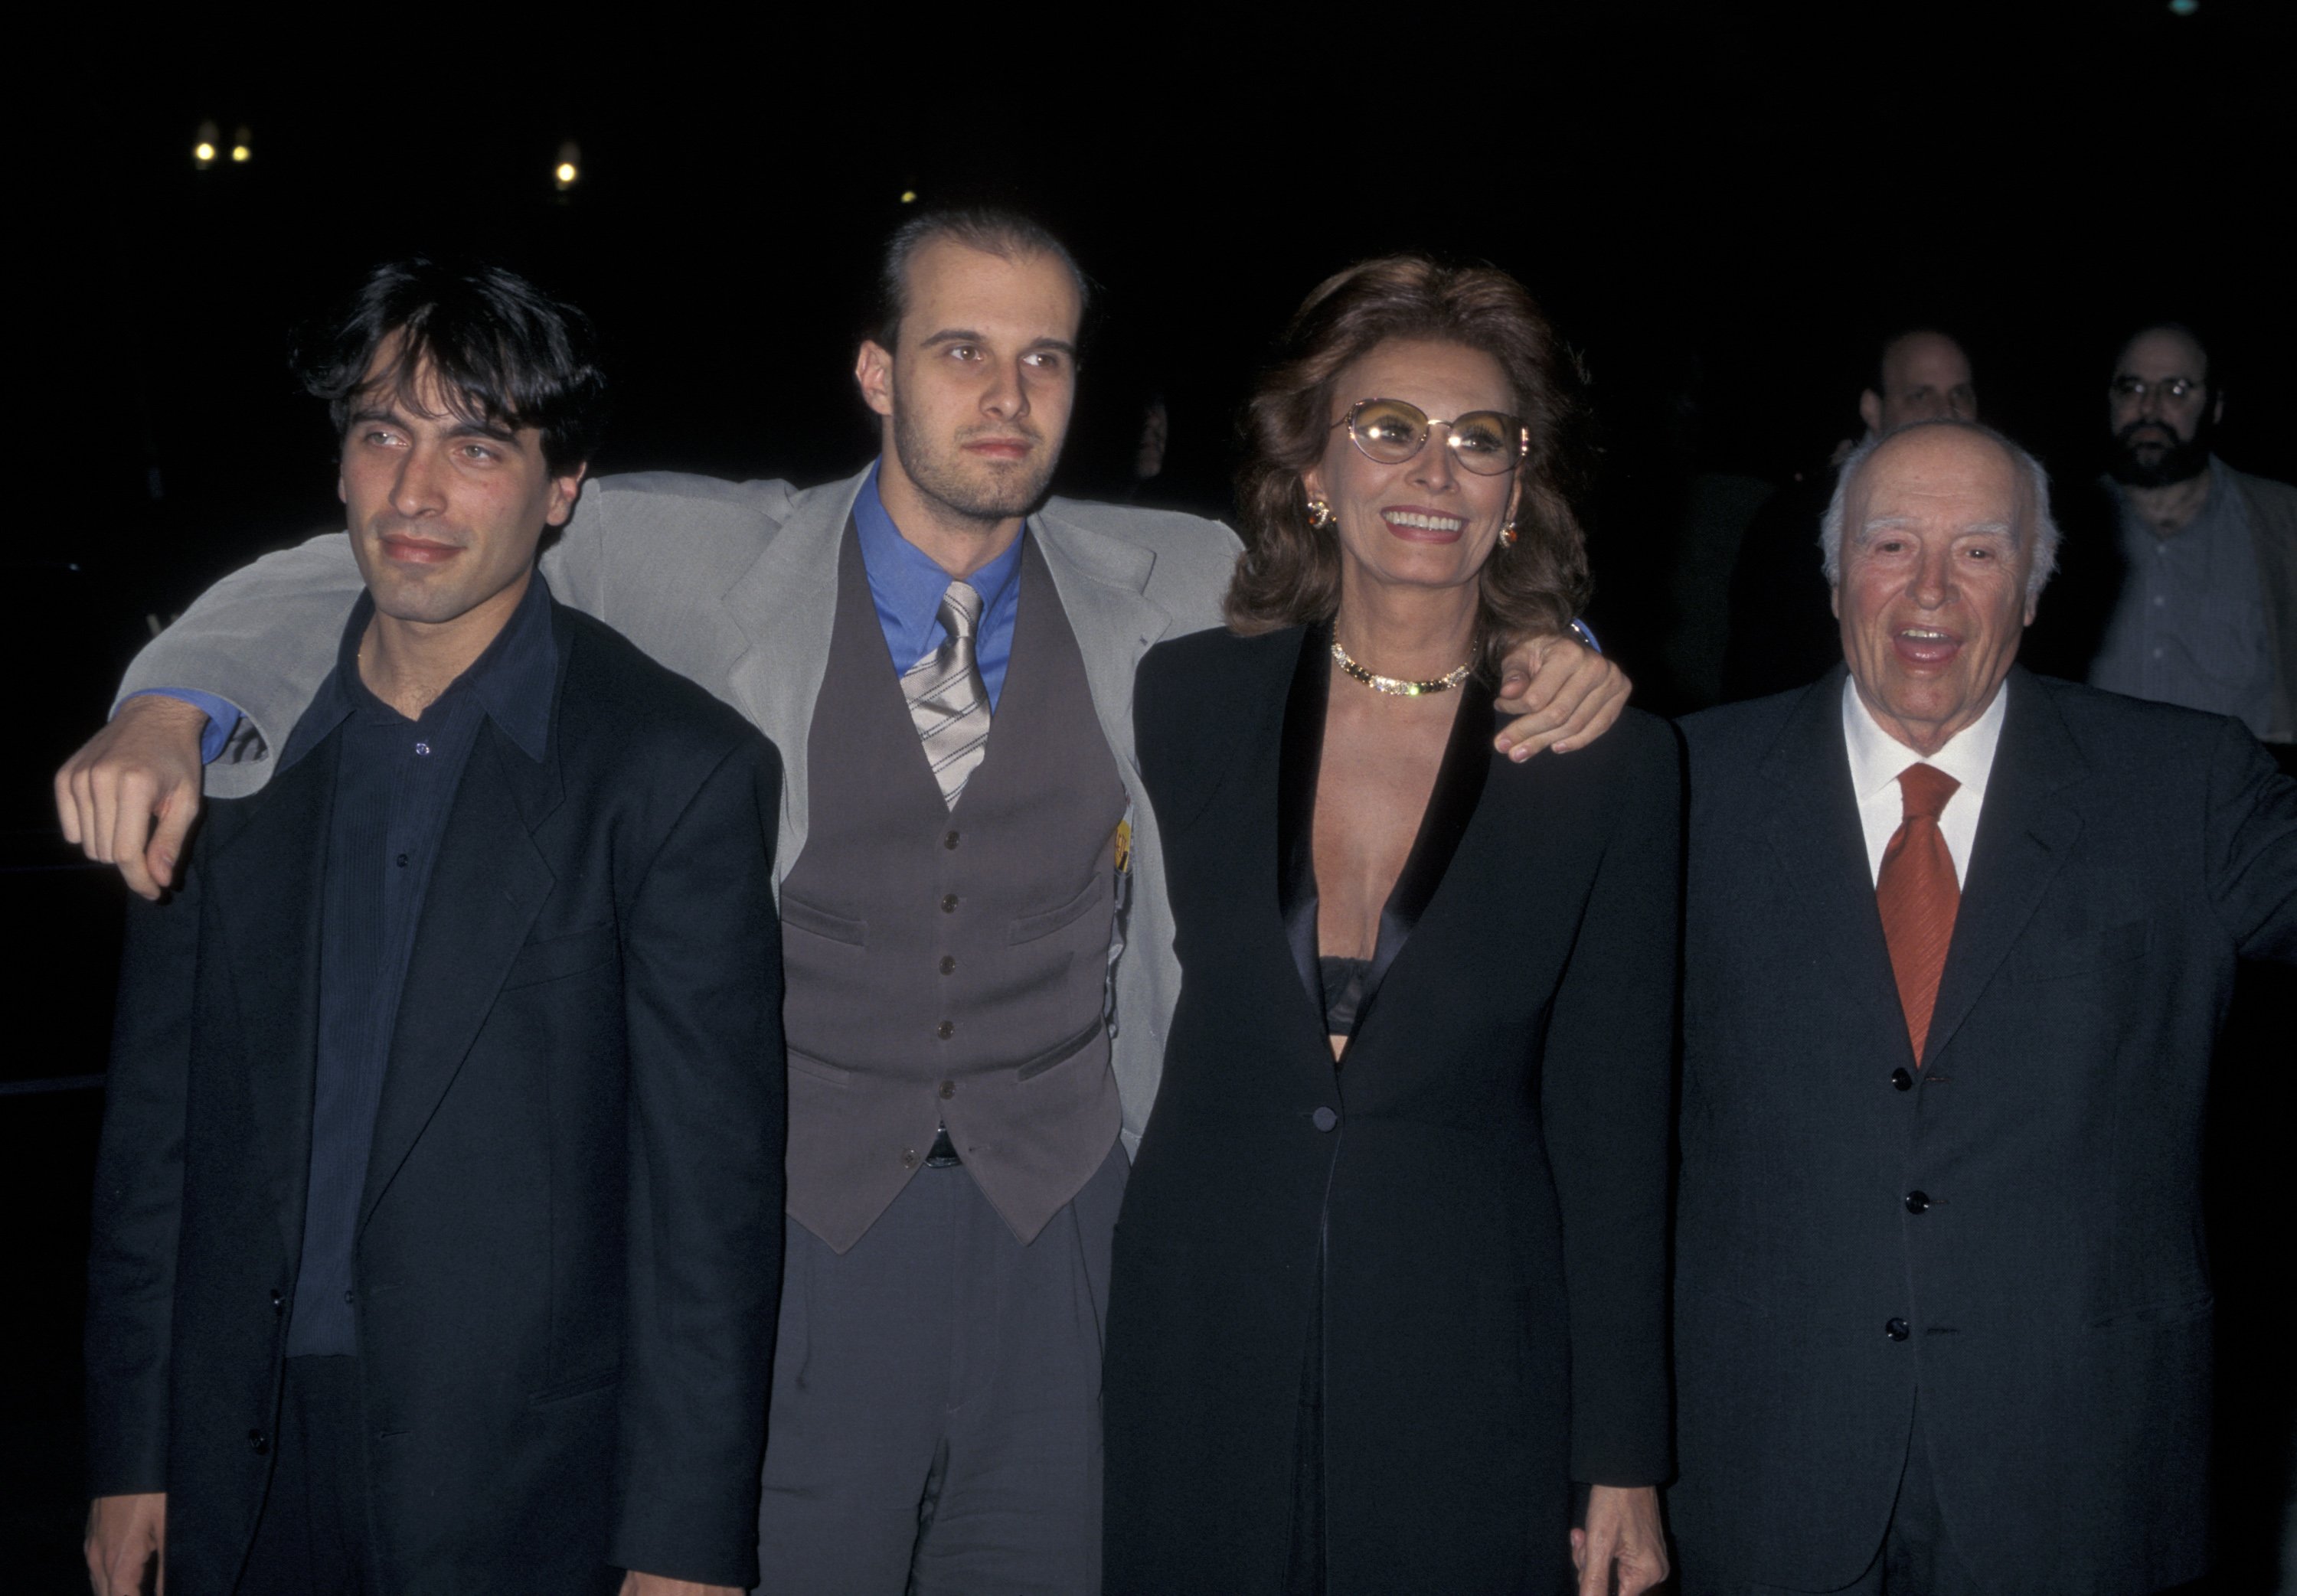 Carlo Ponti Jr., Edoardo Ponti, Sophia Loren, and Carlo Ponti. | Source: Ron Galella/Getty Images